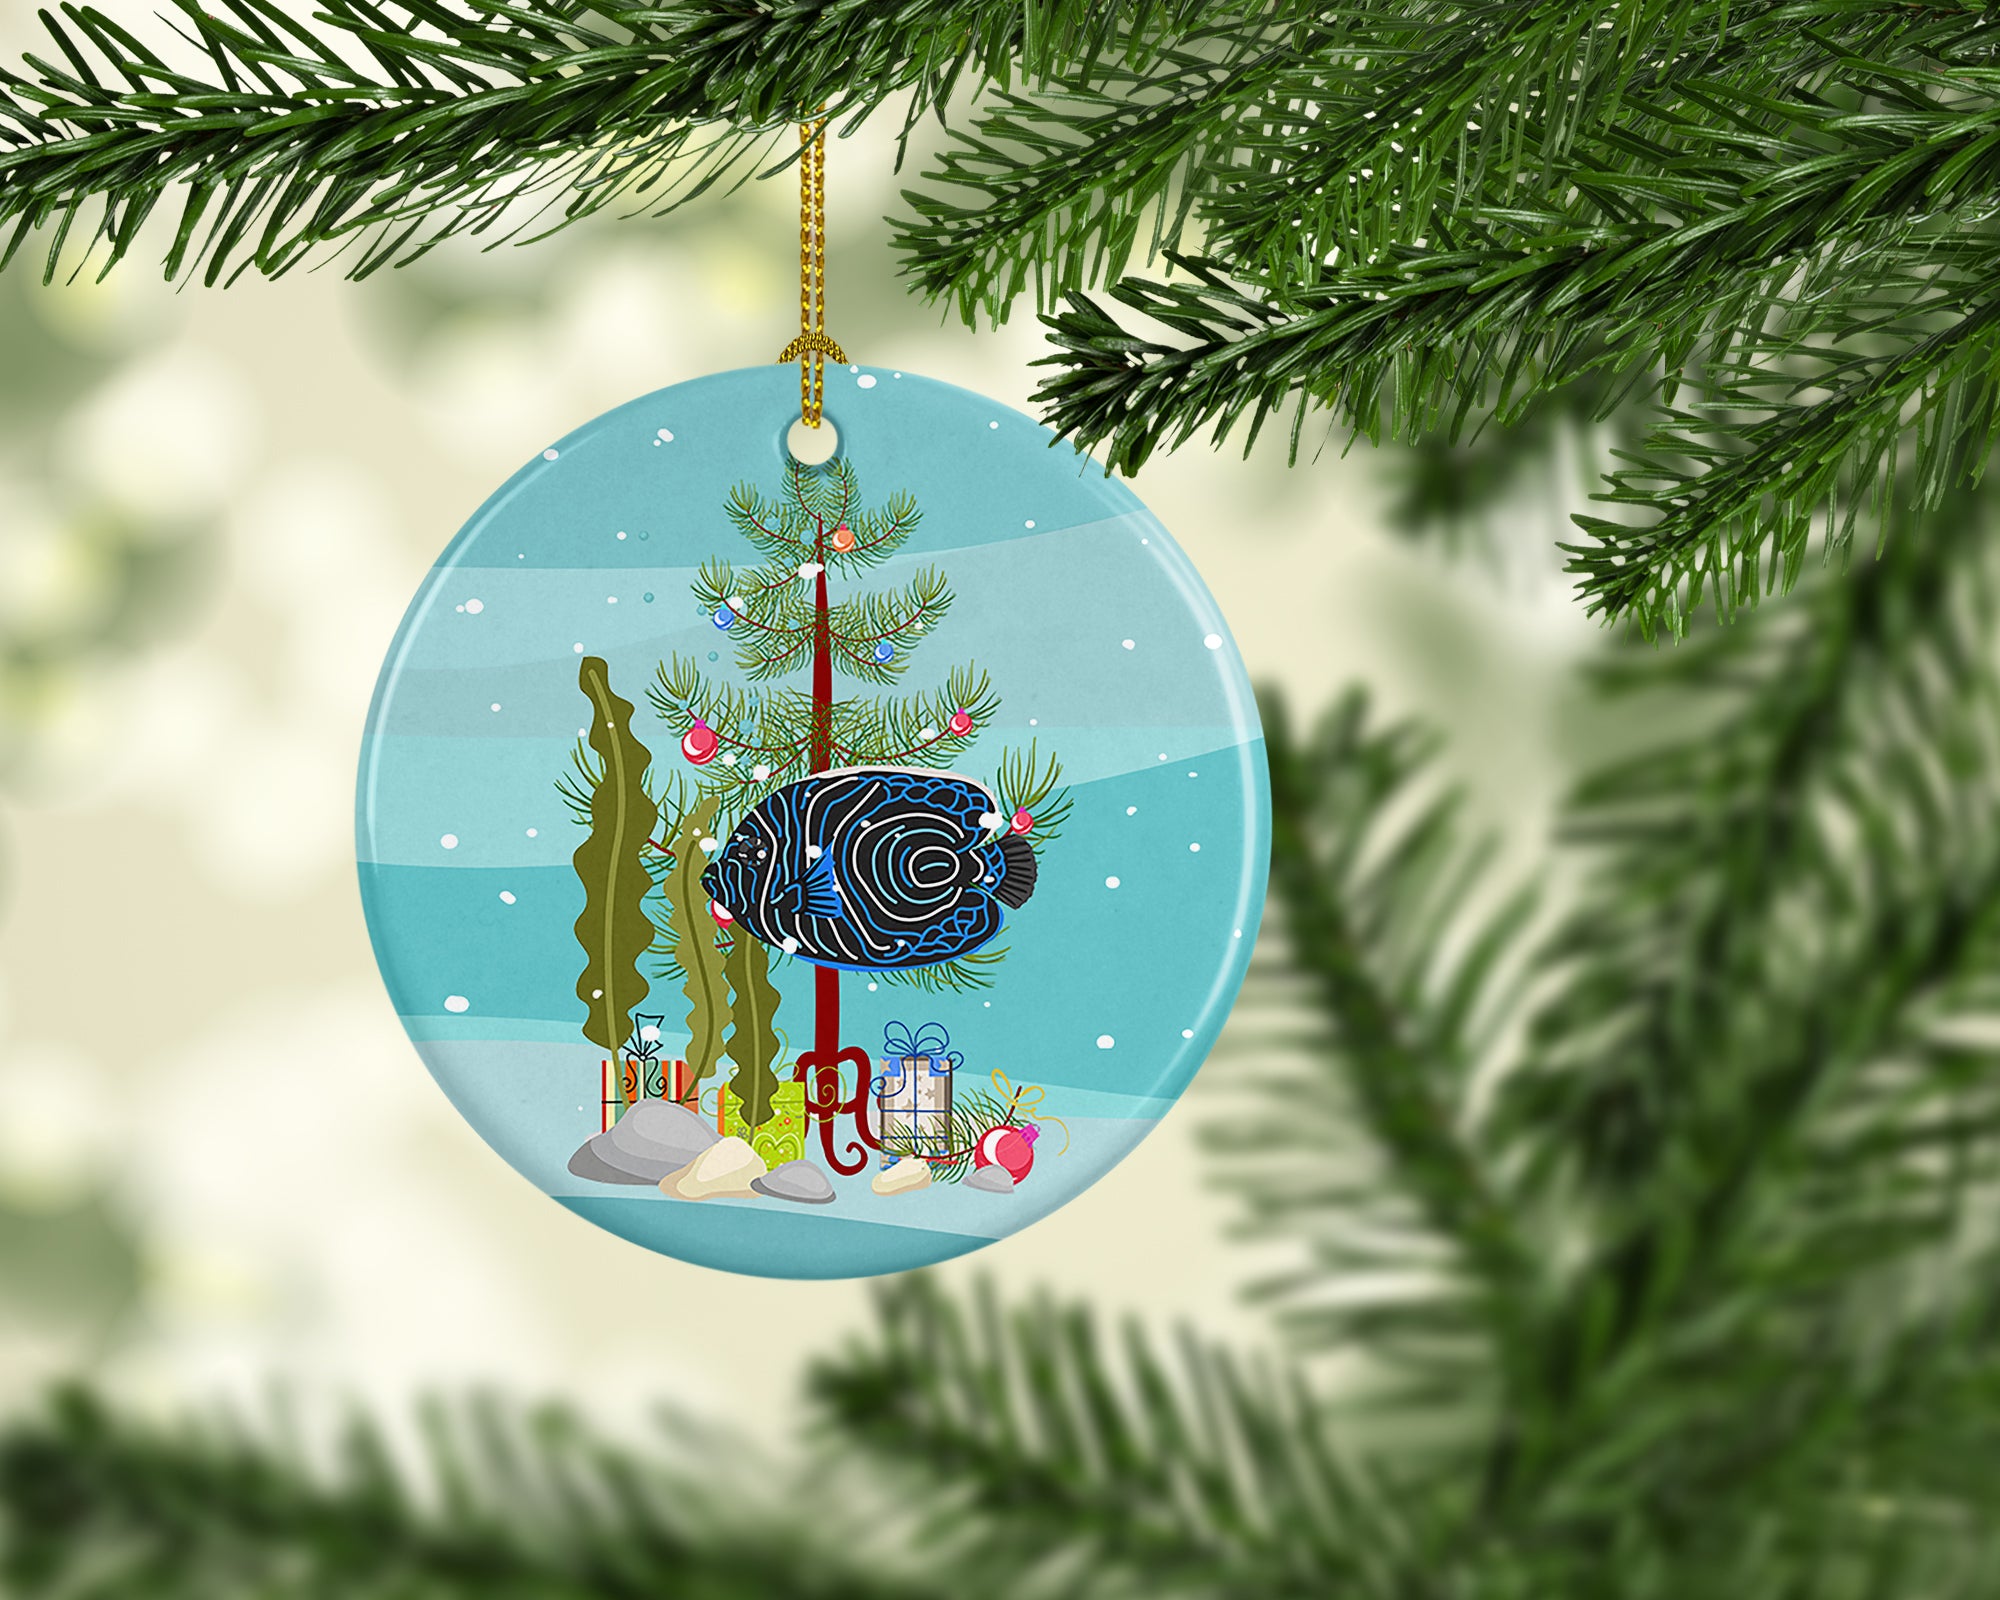 Buy this Emperor Angelfish Merry Christmas Ceramic Ornament